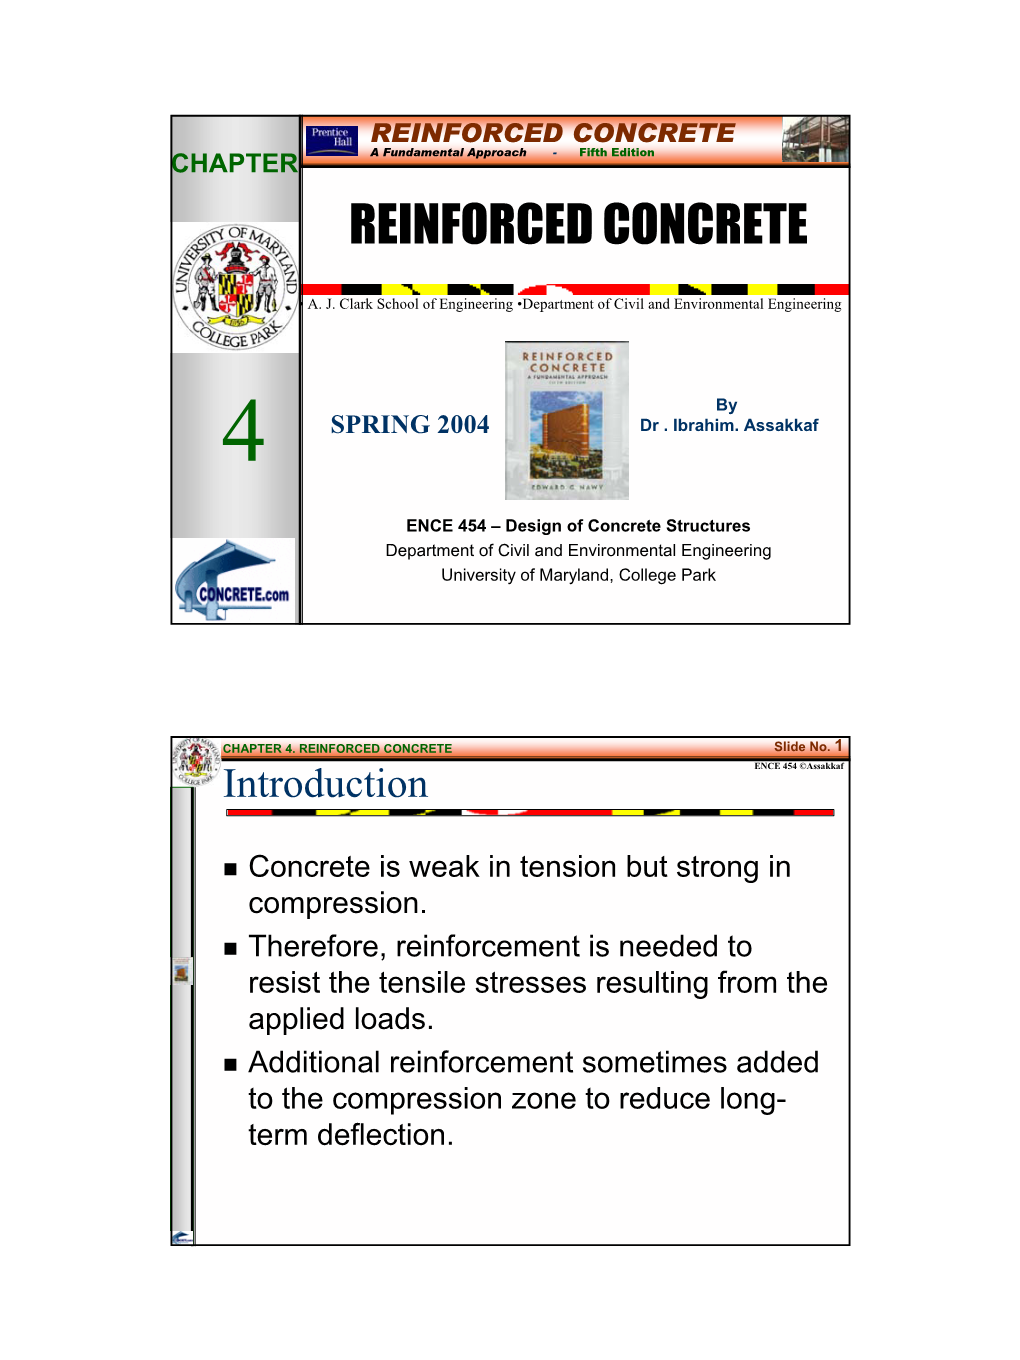 REINFORCED Concrete Design Concretfifthe Edition CHAPTER a Fundamental Approach - Fifth Edition REINFORCED CONCRETE